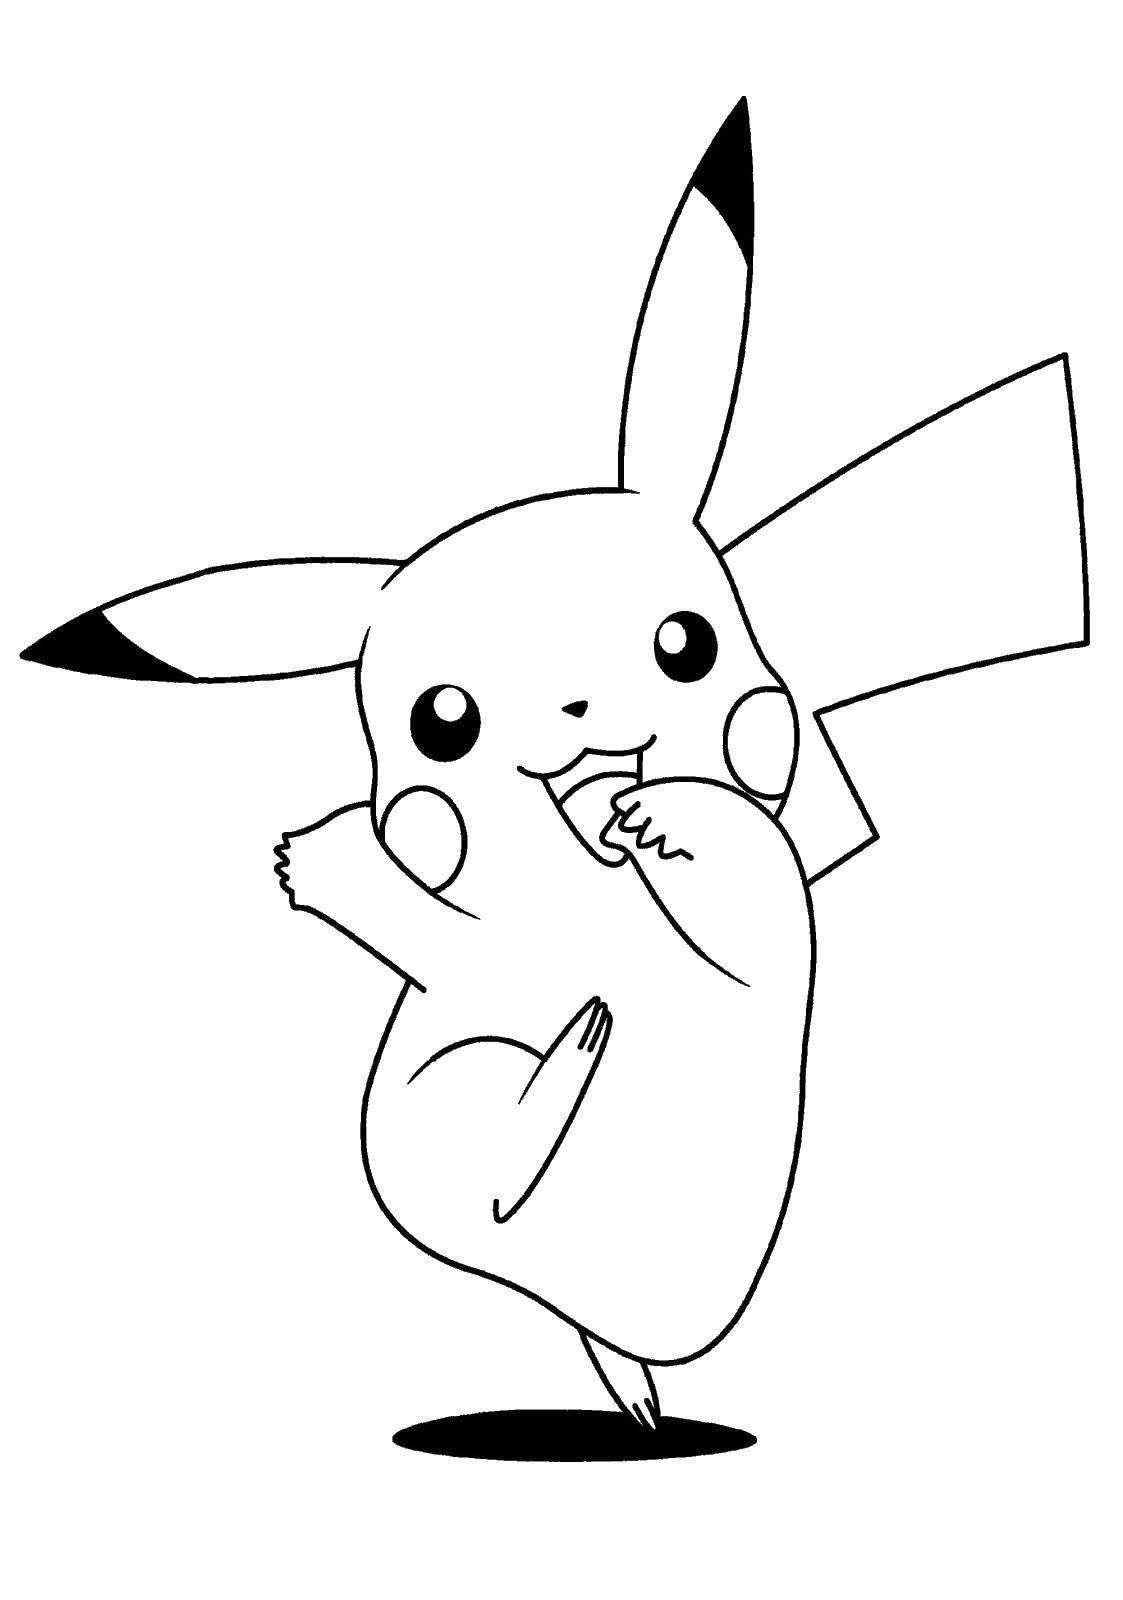 Coloring Pikachu. Category Pokemon. Tags:  Pikachu, Pokemon.